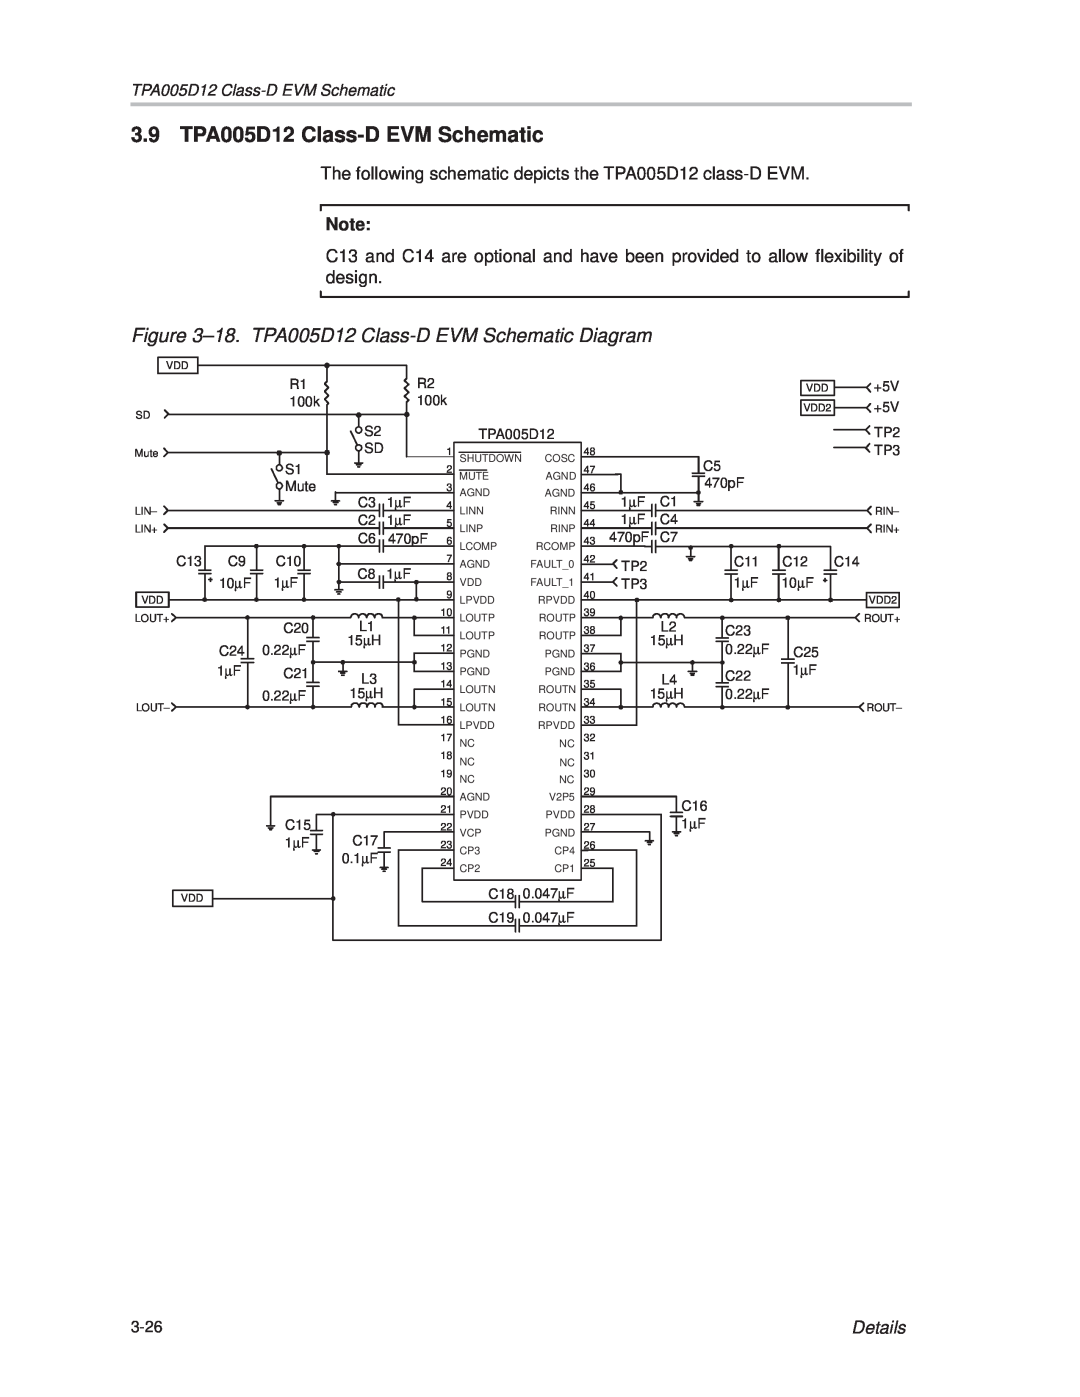 Texas Instruments manual 3.9 TPA005D12 Class-DEVM Schematic, Details 